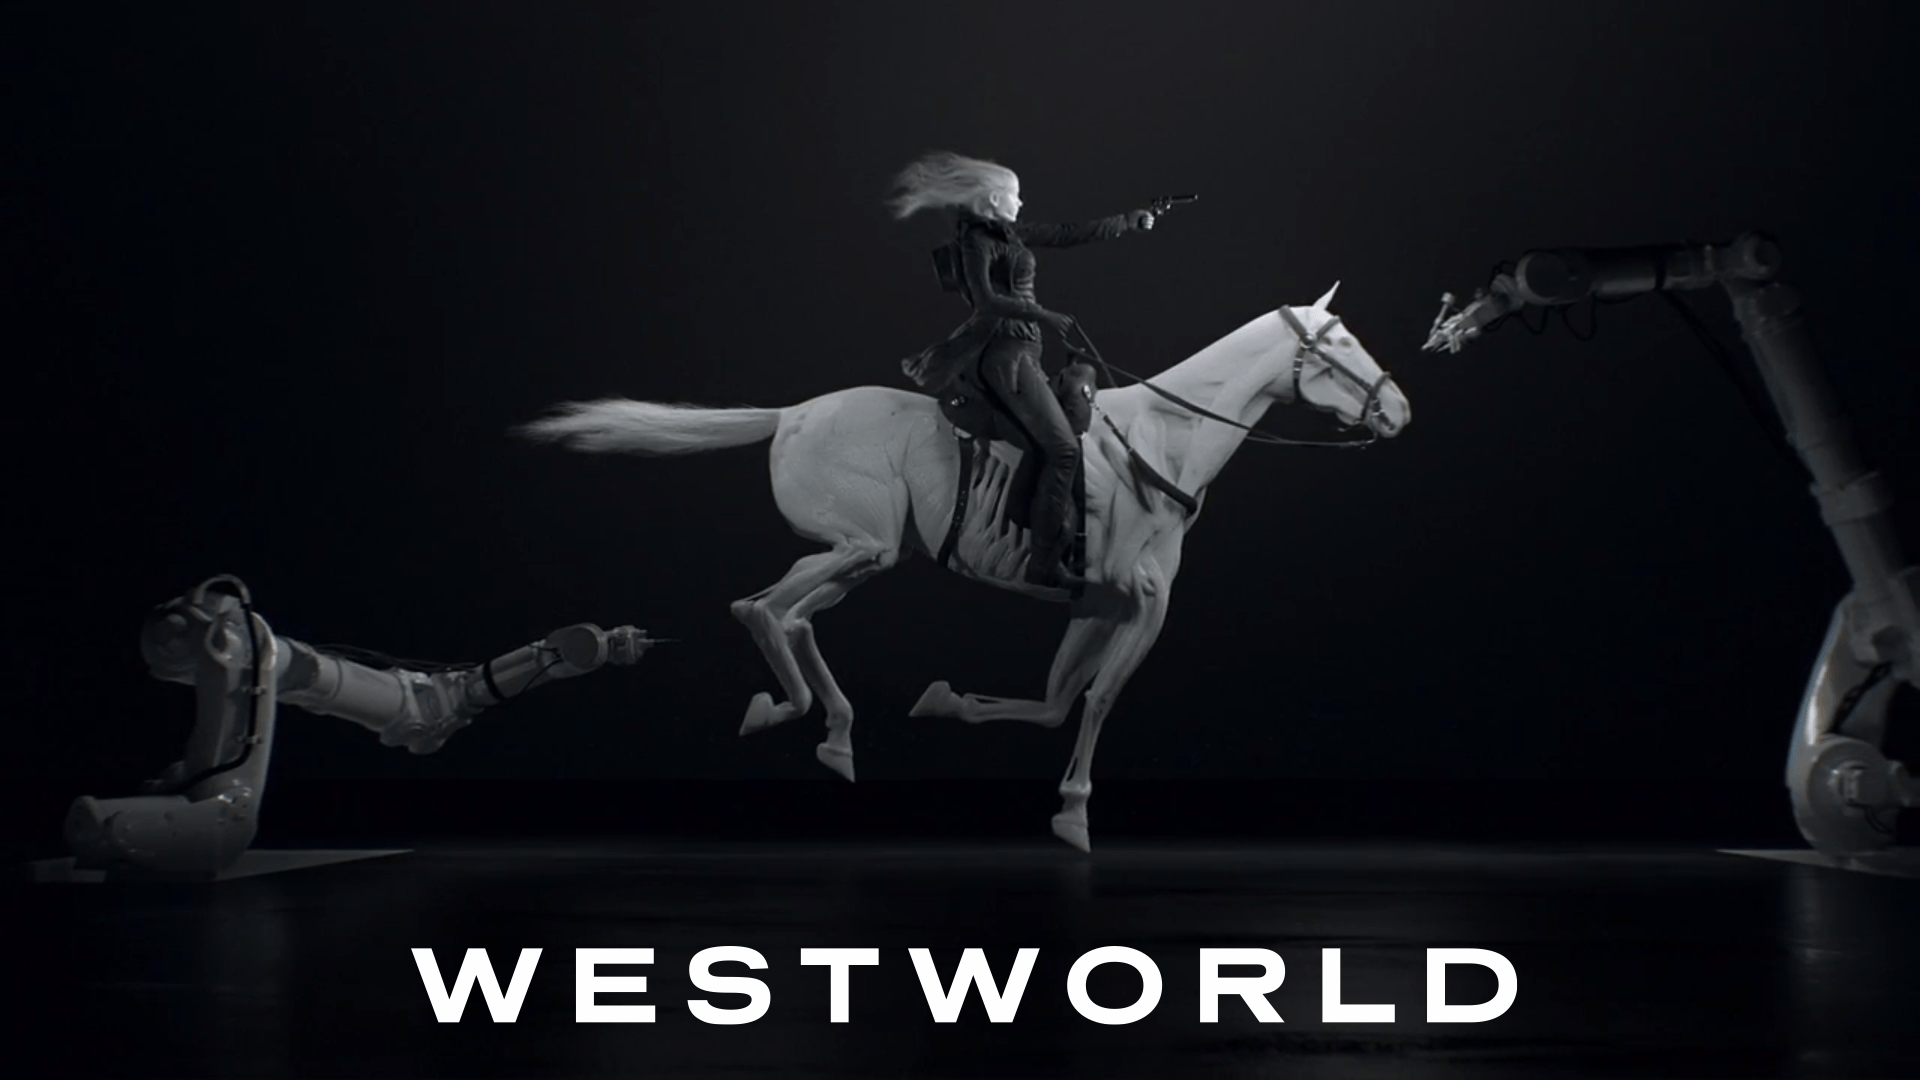 Westworld Wallpaper